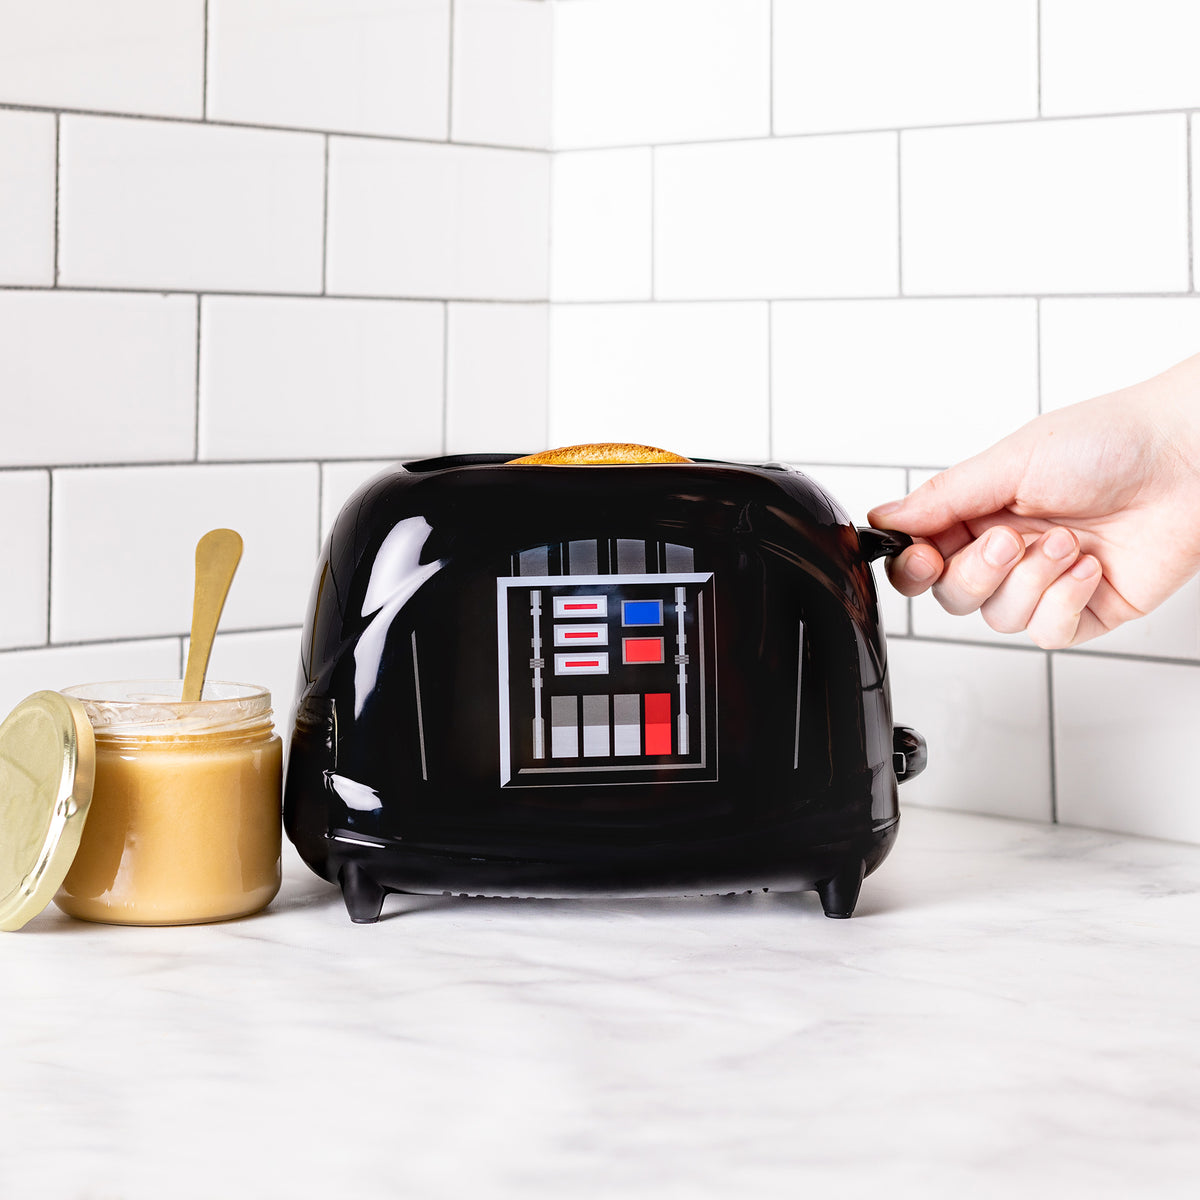 Uncanny Brands Star Wars Mandalorian The Child Toaster